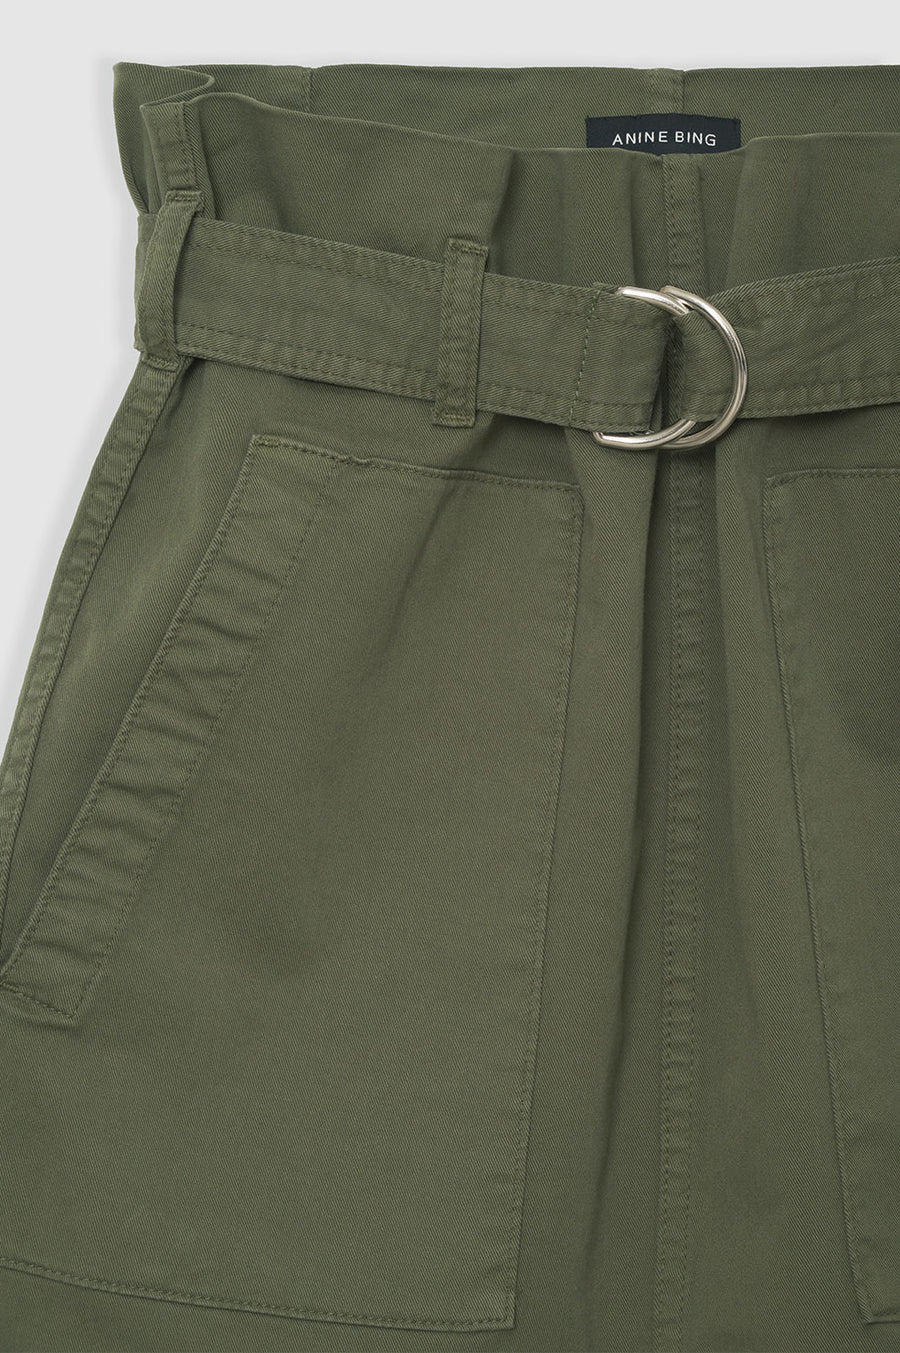 ANINE BING Aveline Skirt in Army Green XS